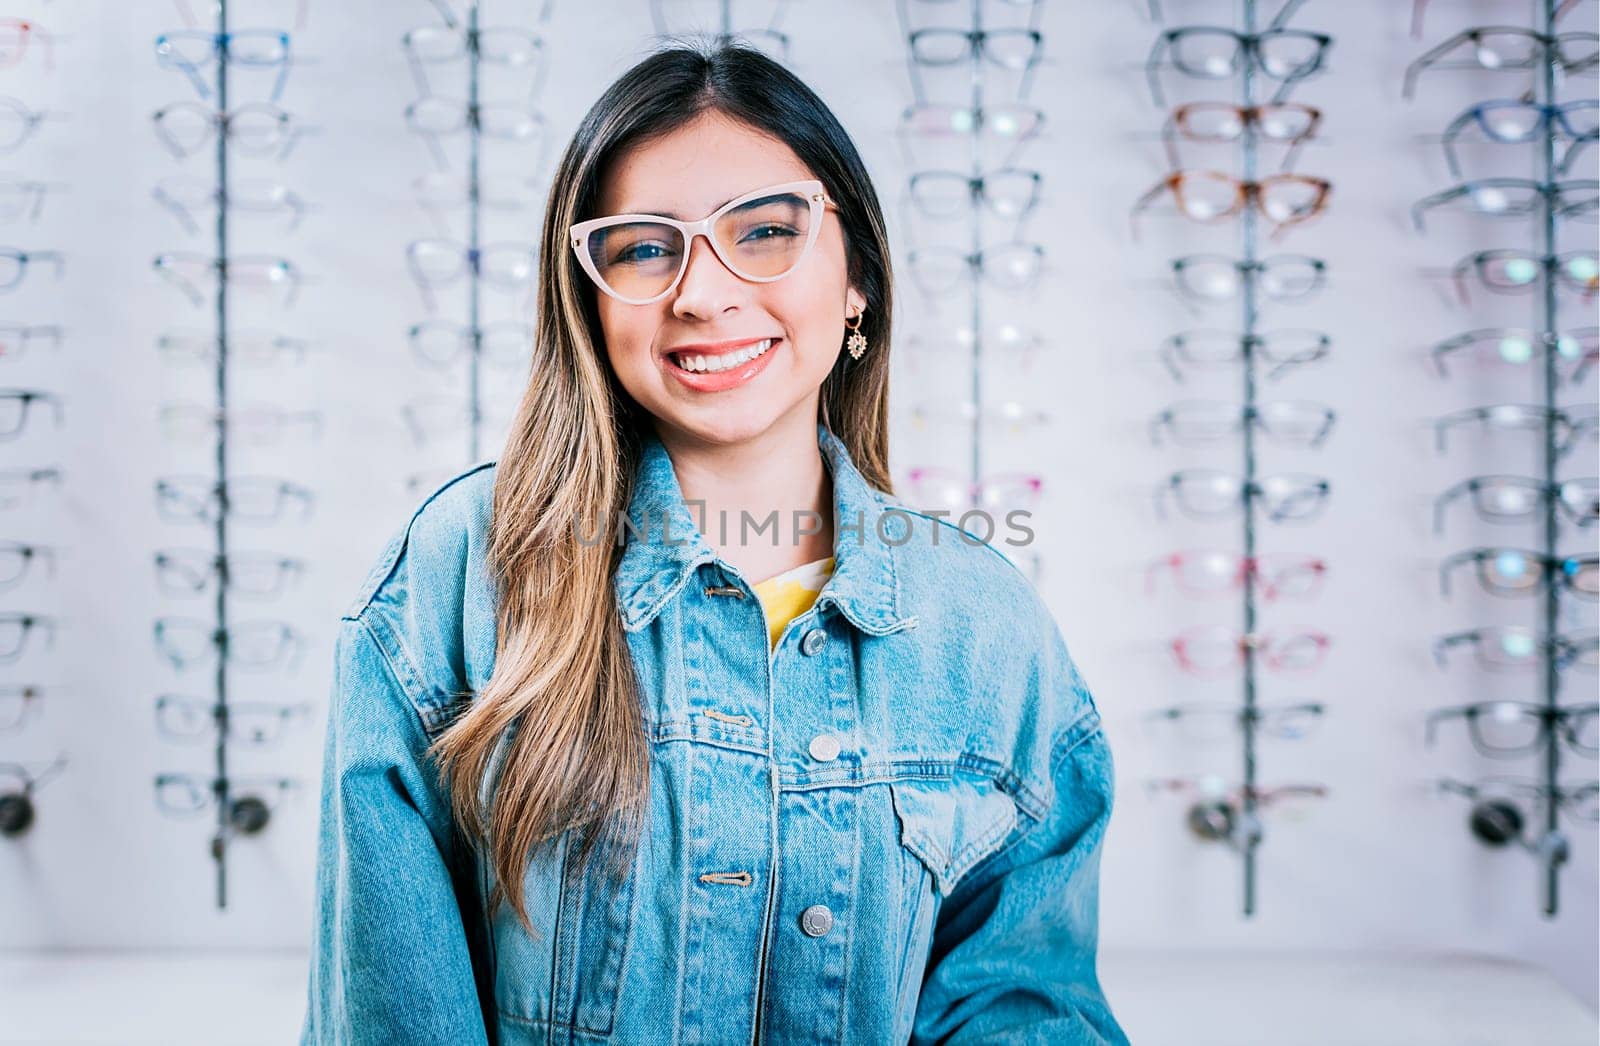 Smiling happy girl in eyeglasses with store eyeglasses background, Portrait of happy girl in glasses in an eyeglasses store